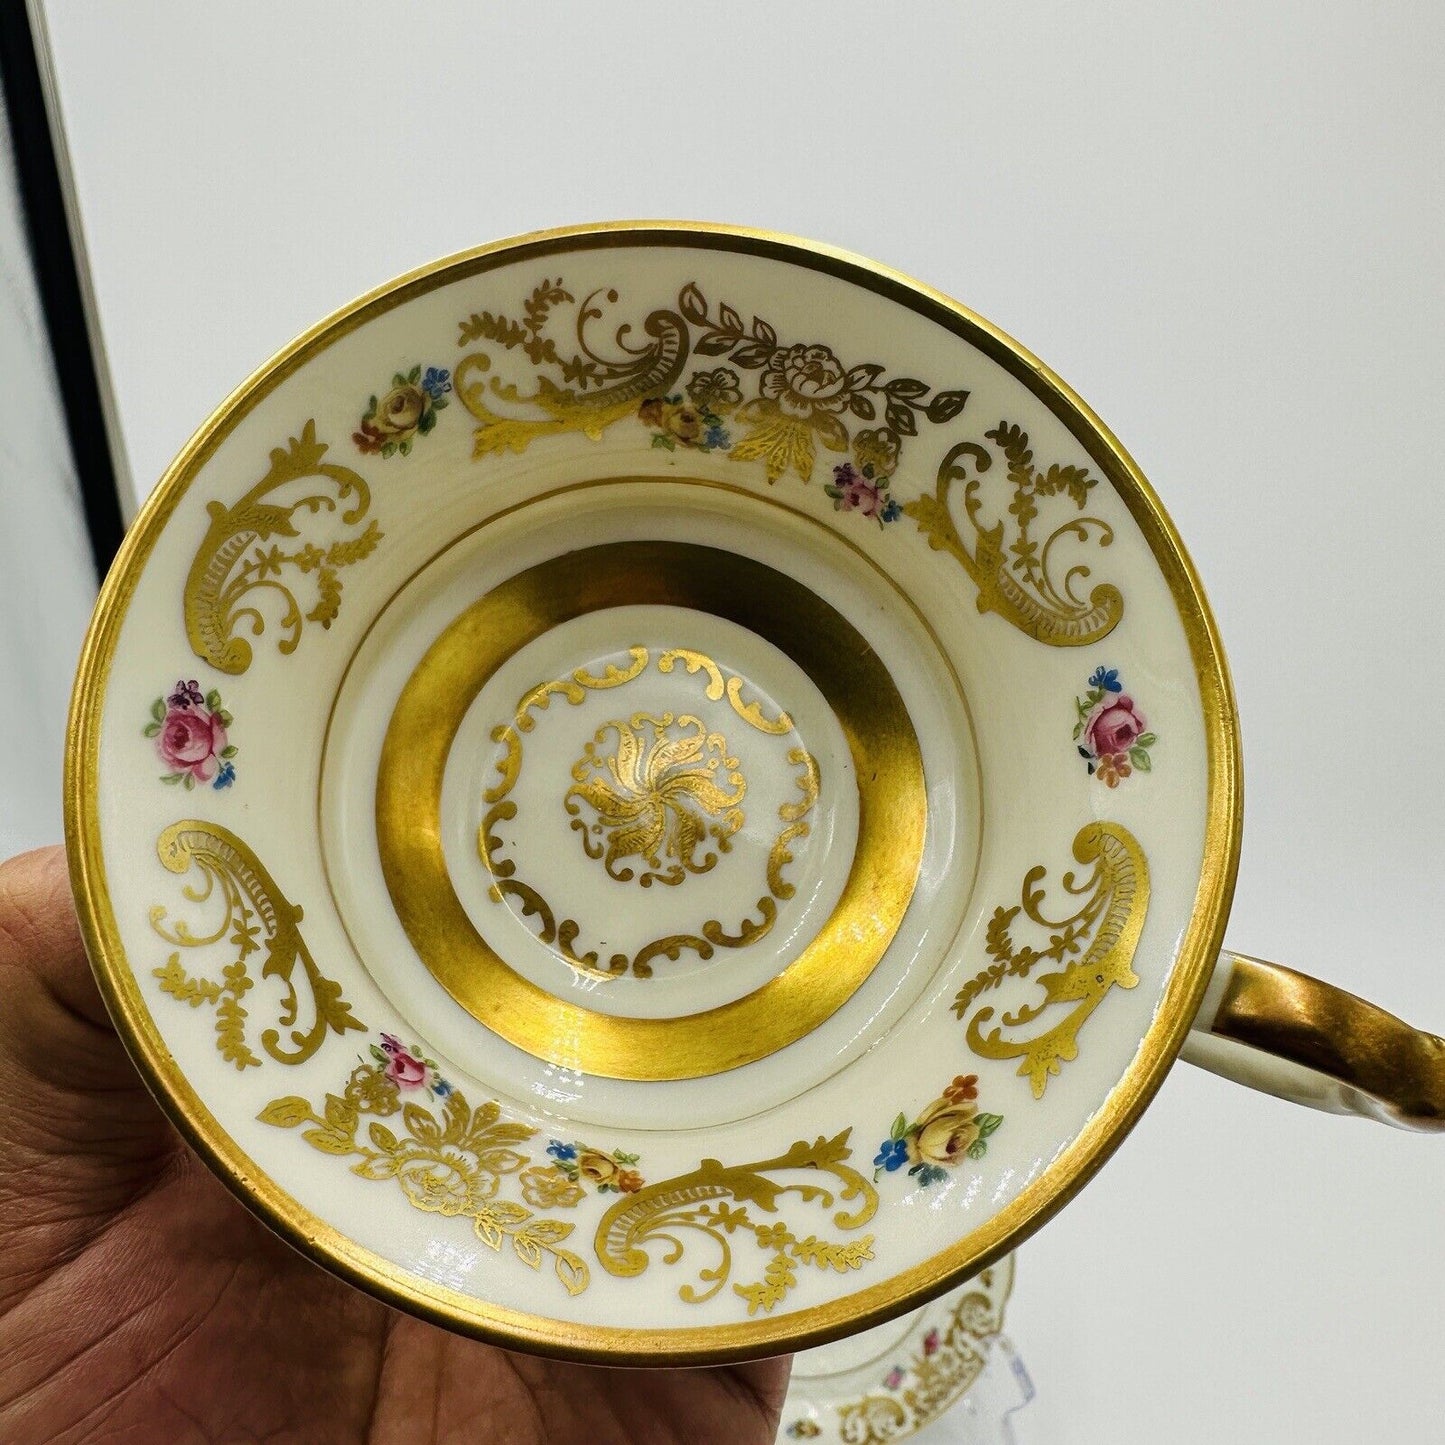 Hertel-Jacob Rehau Teacup Saucer Bavaria Porcelain 9624 Floral Gold Trim German